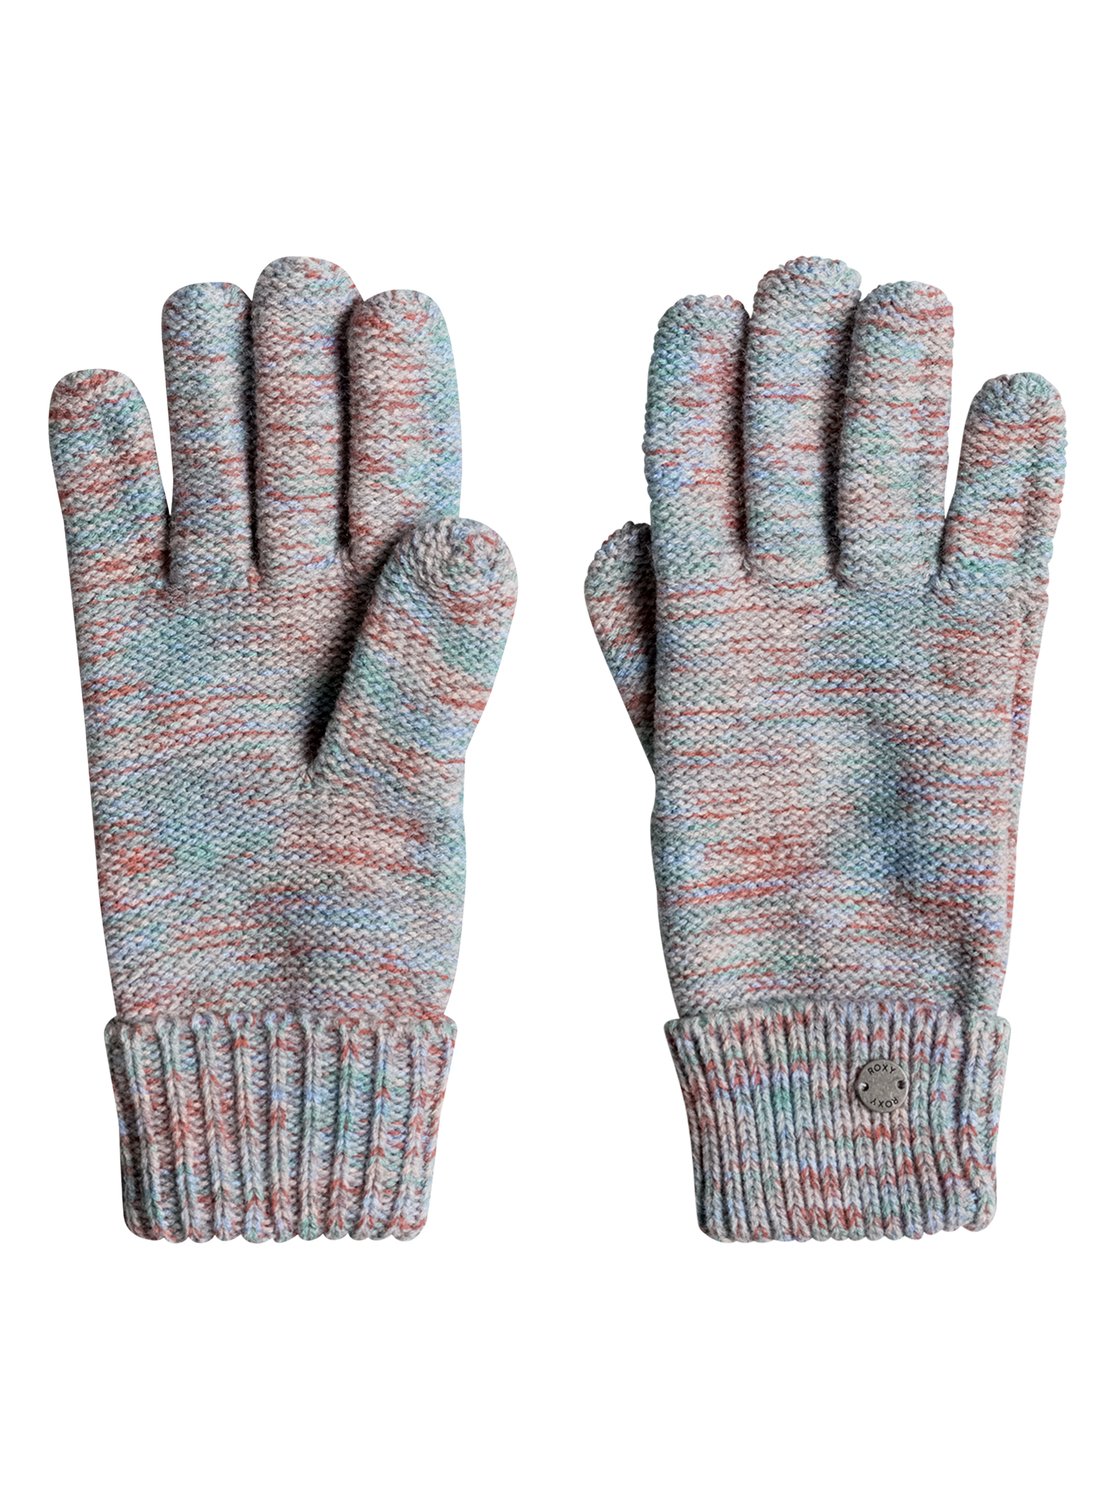 Image result for knitted gloves